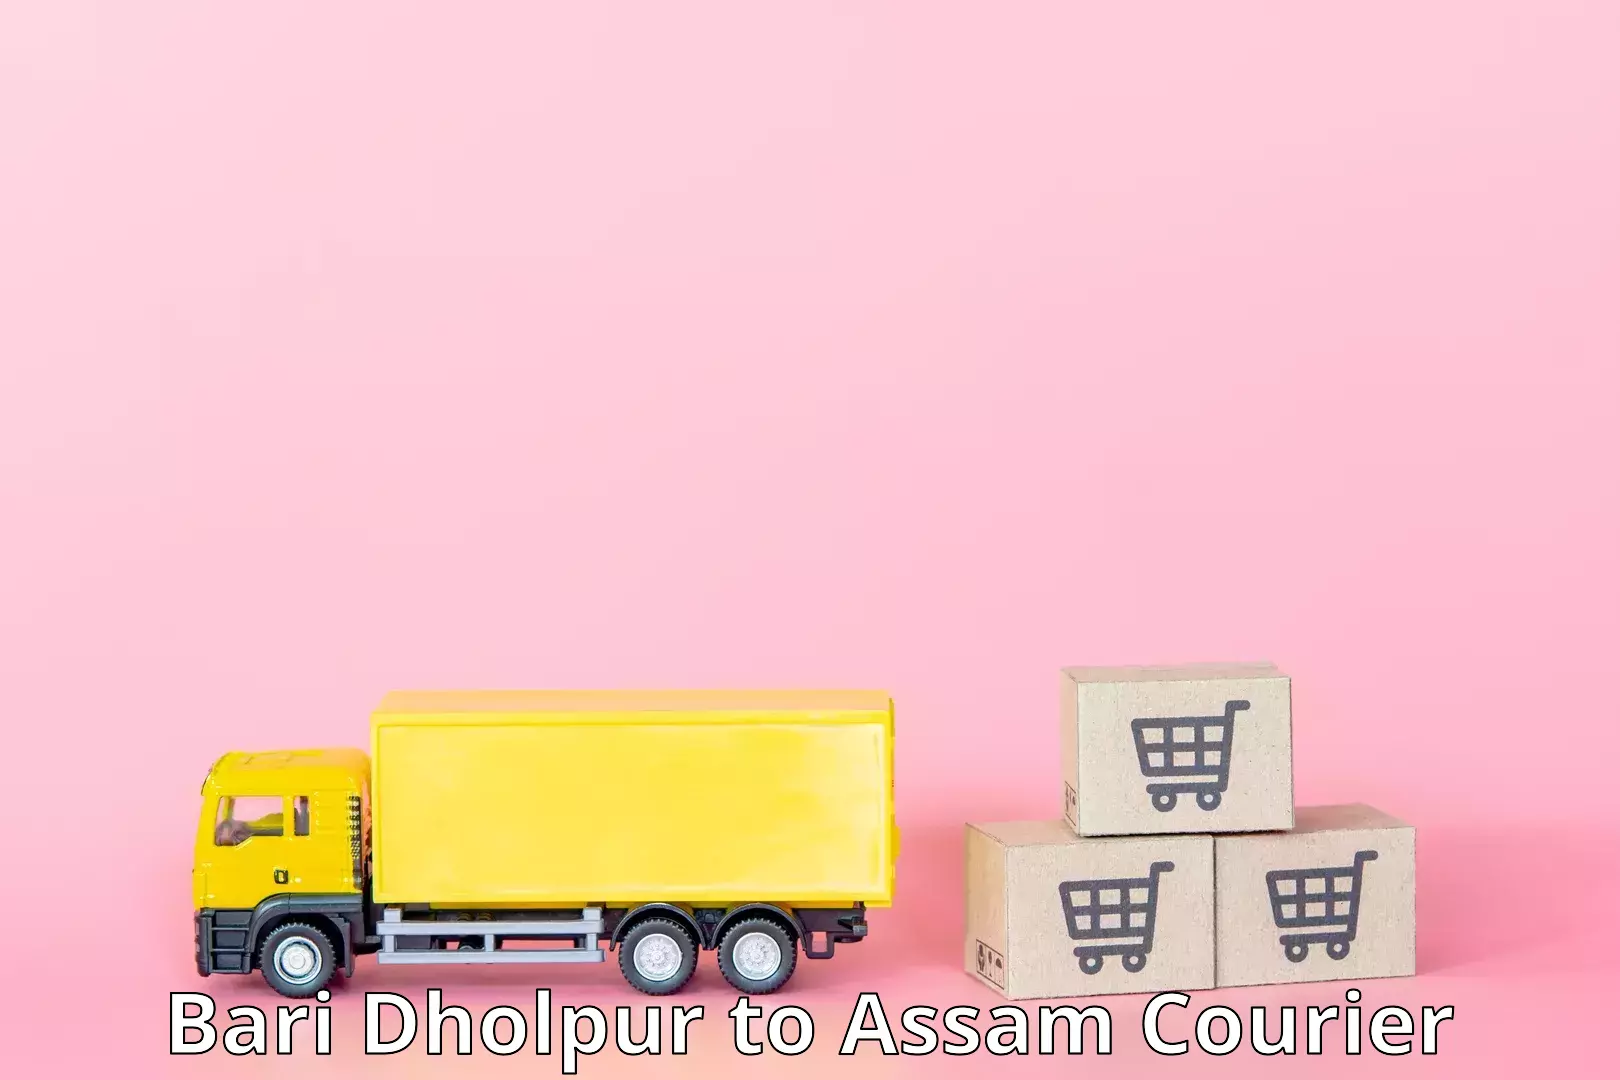 Cash on delivery service Bari Dholpur to Borholla